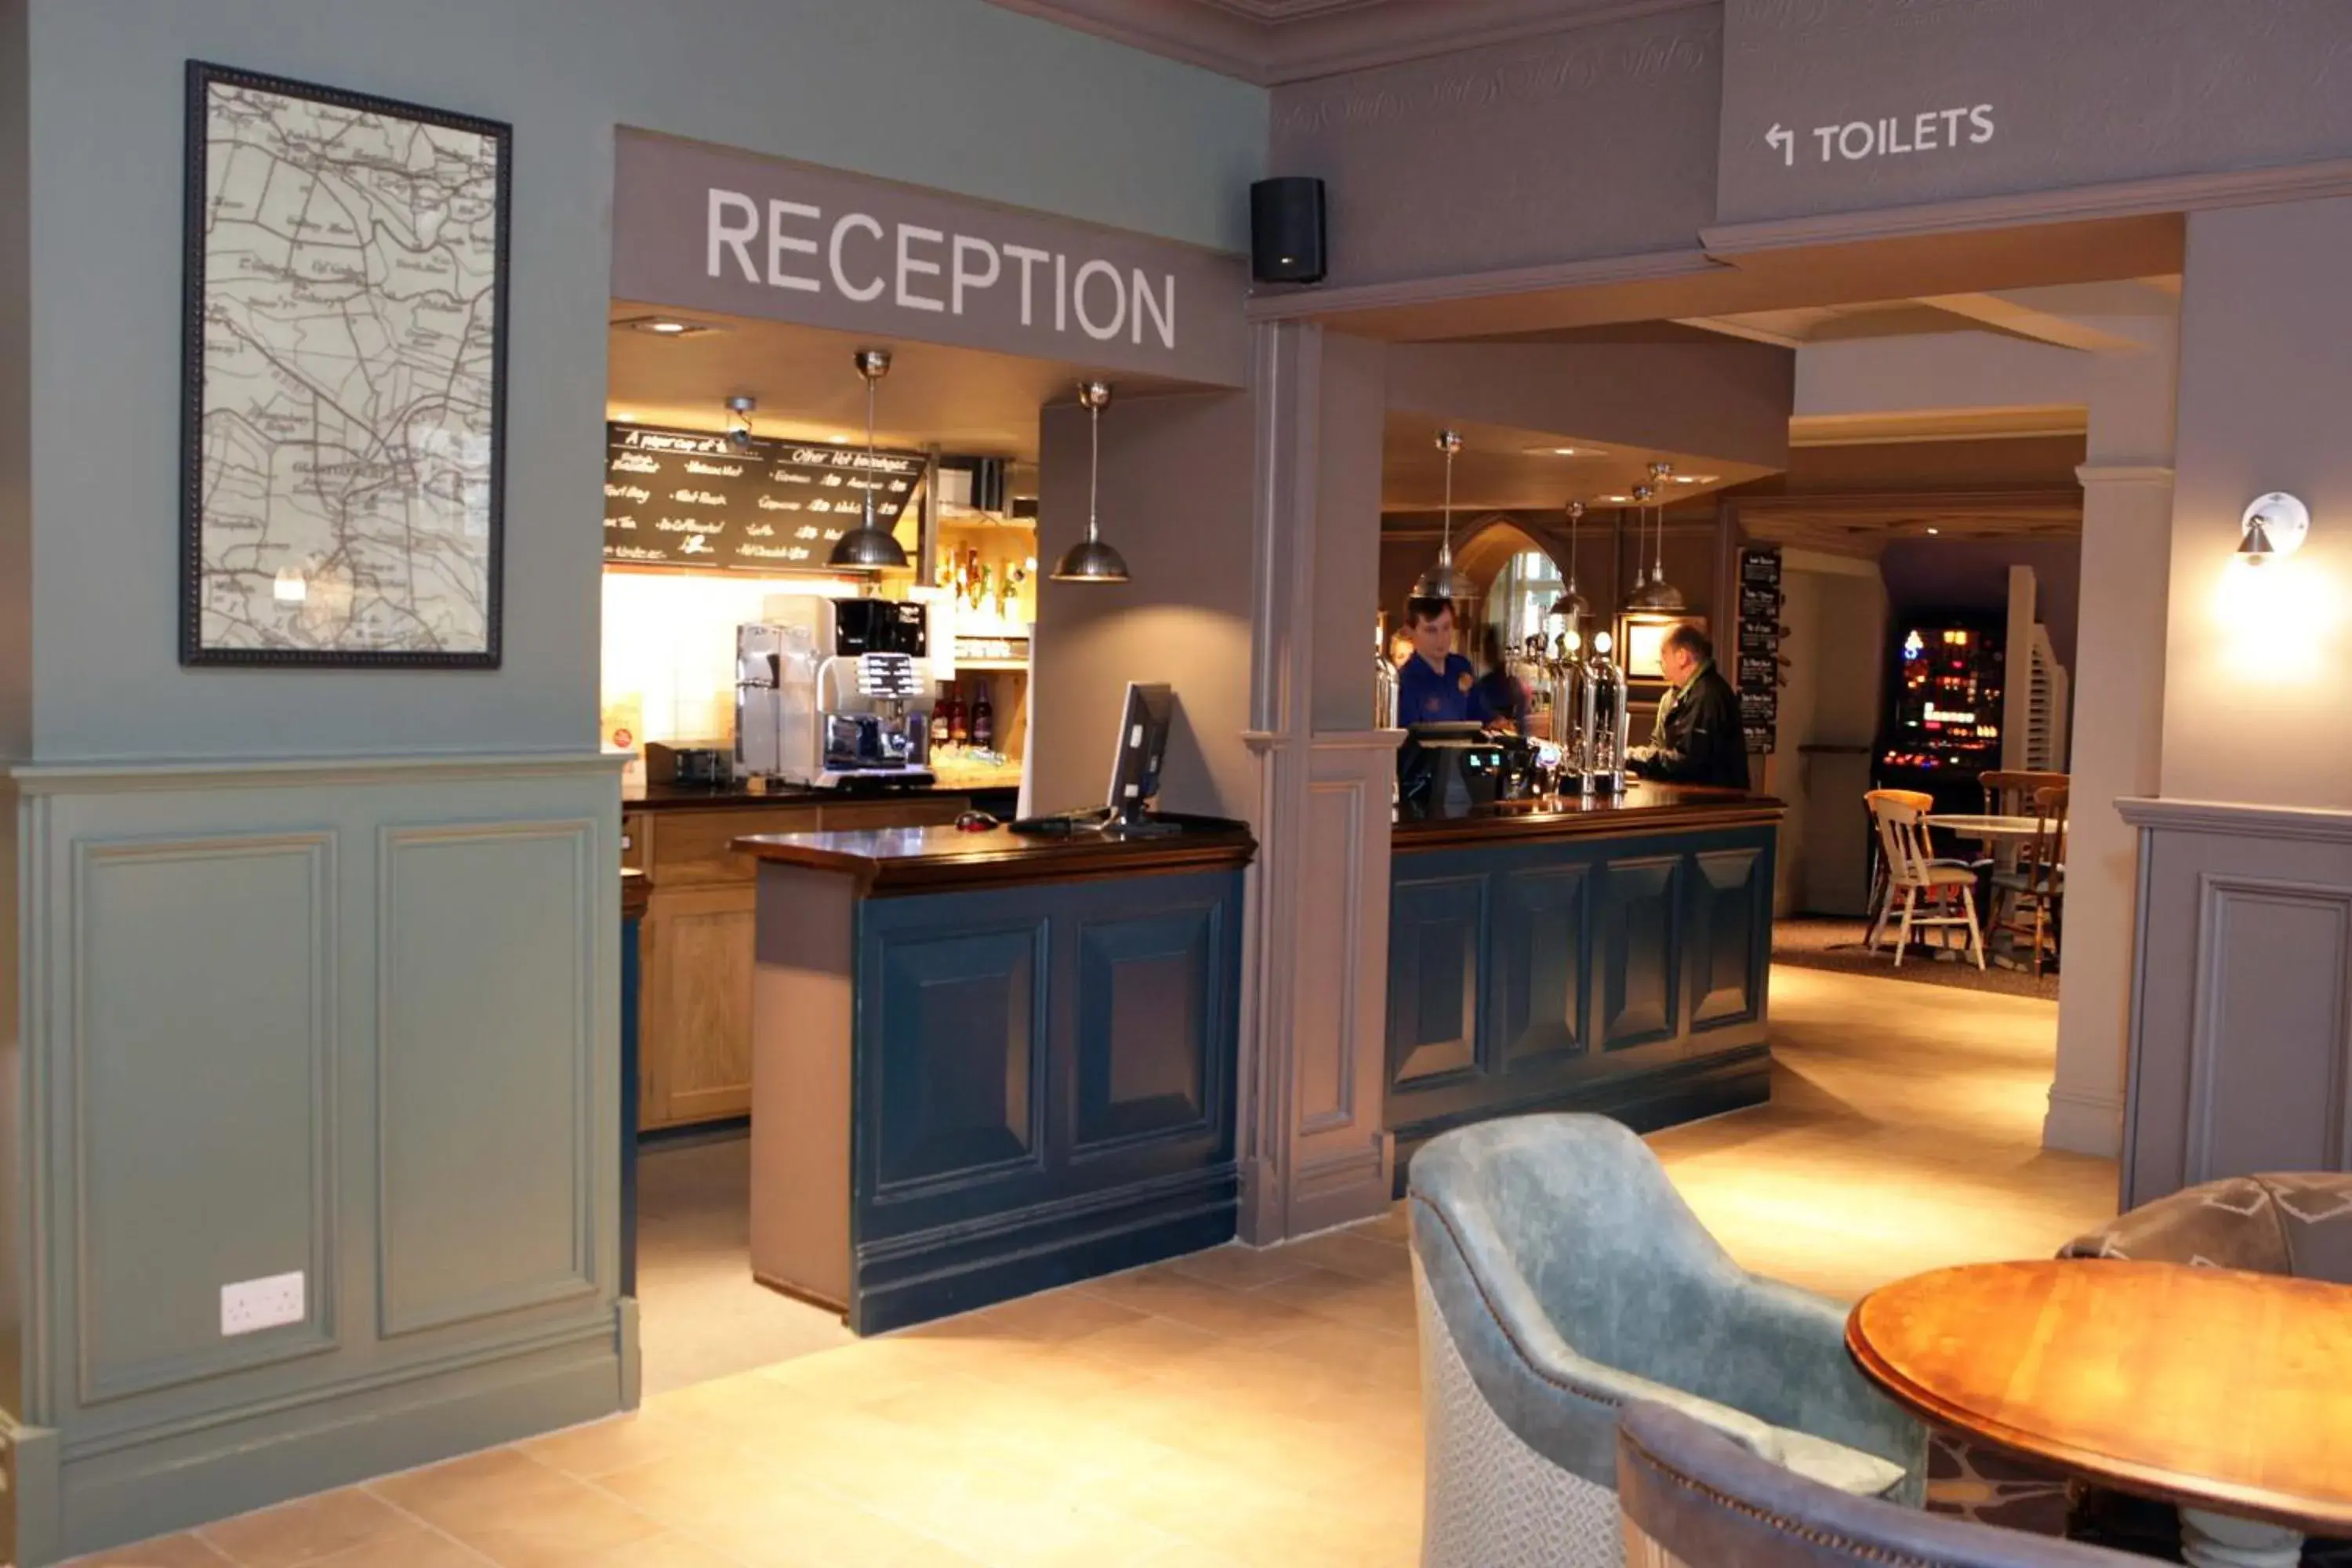 Lobby or reception in Bear Inn, Somerset by Marston's Inns